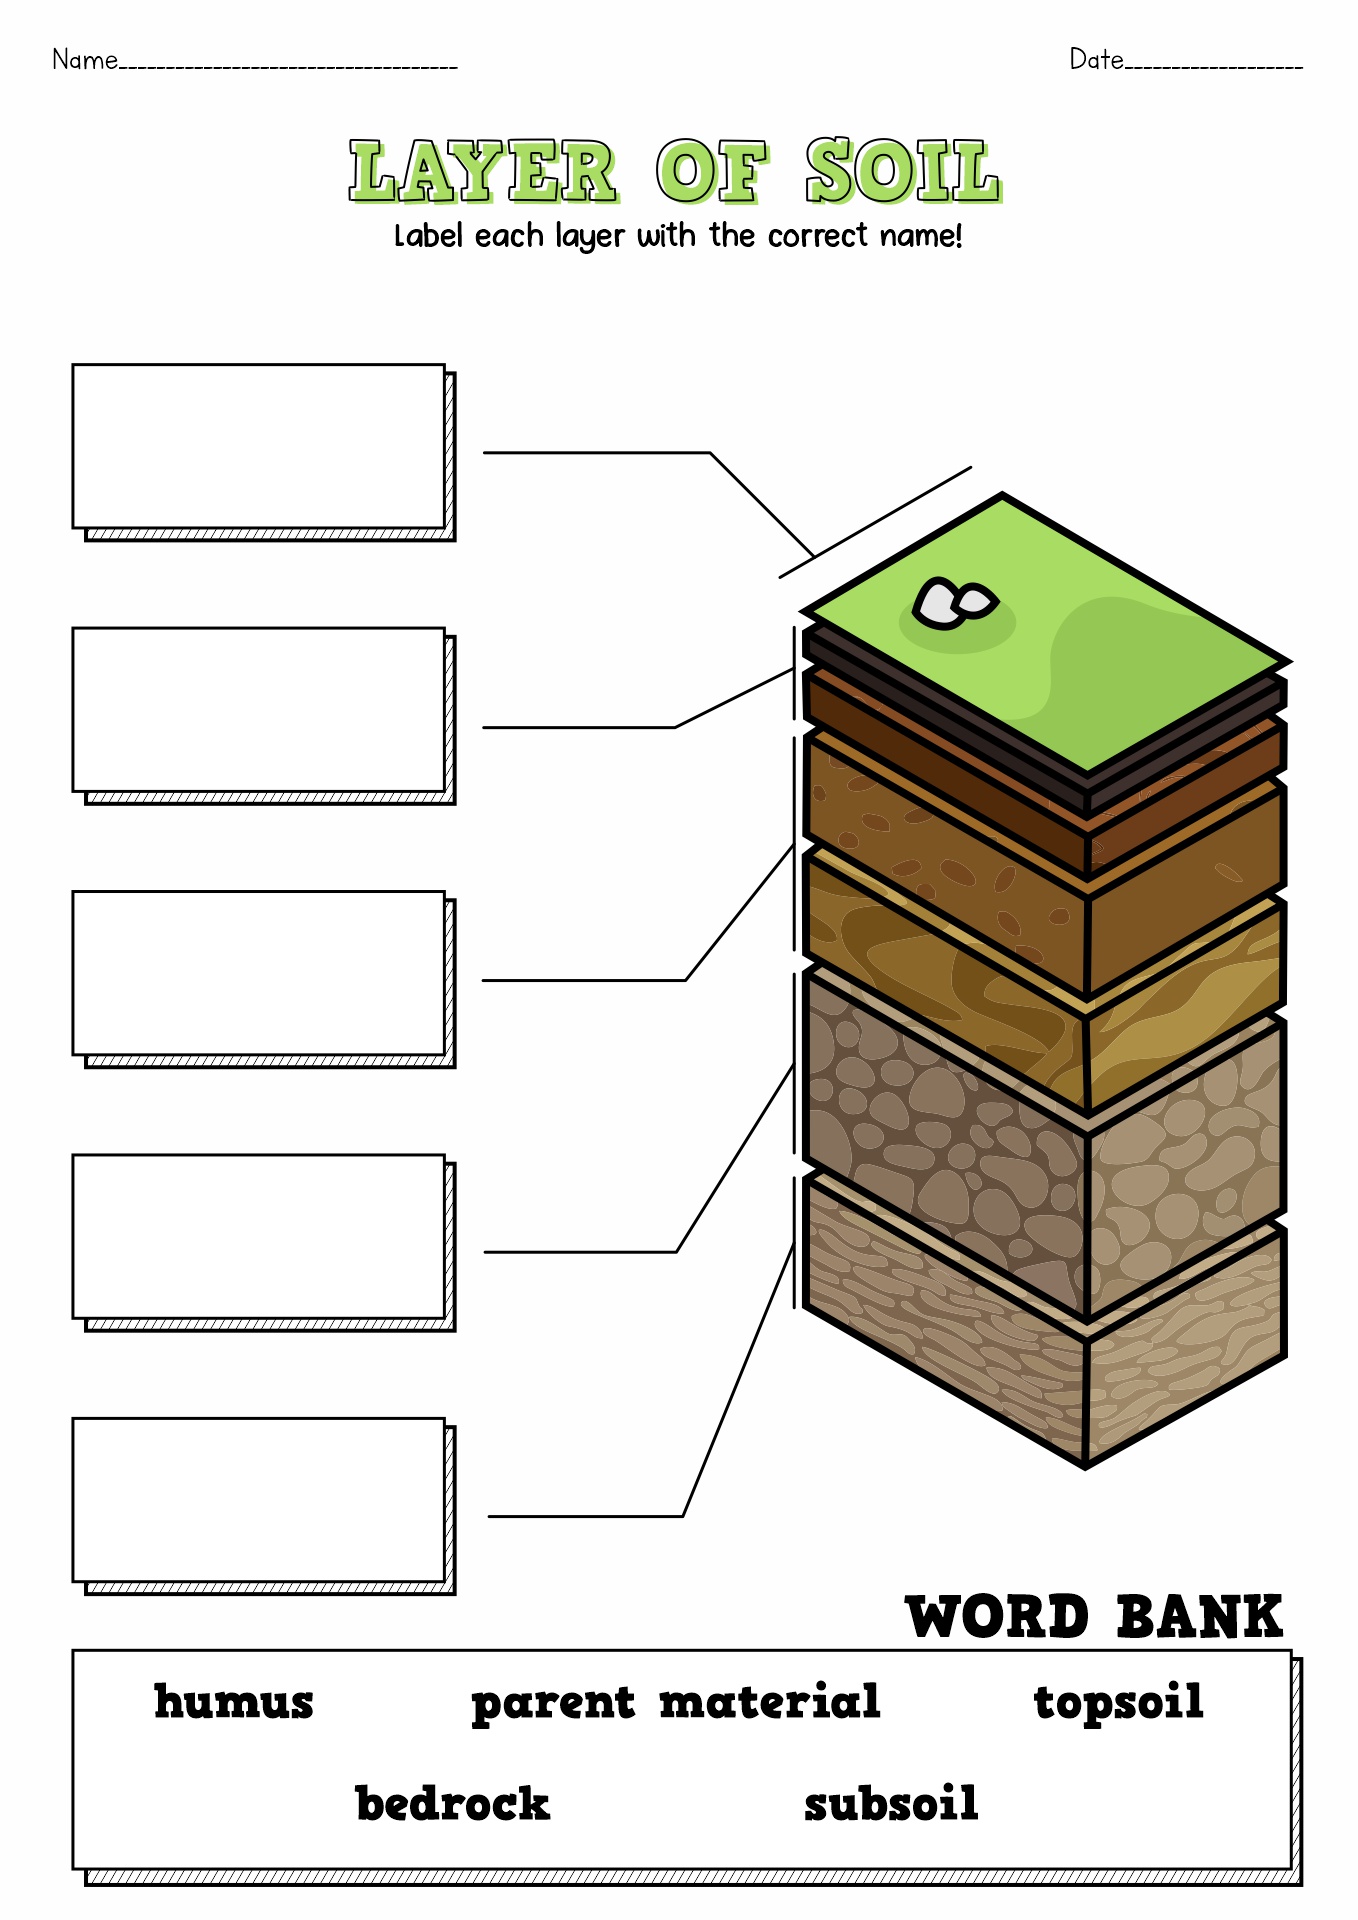 earths-layers-worksheet-4th-grade-alphabet-worksheets